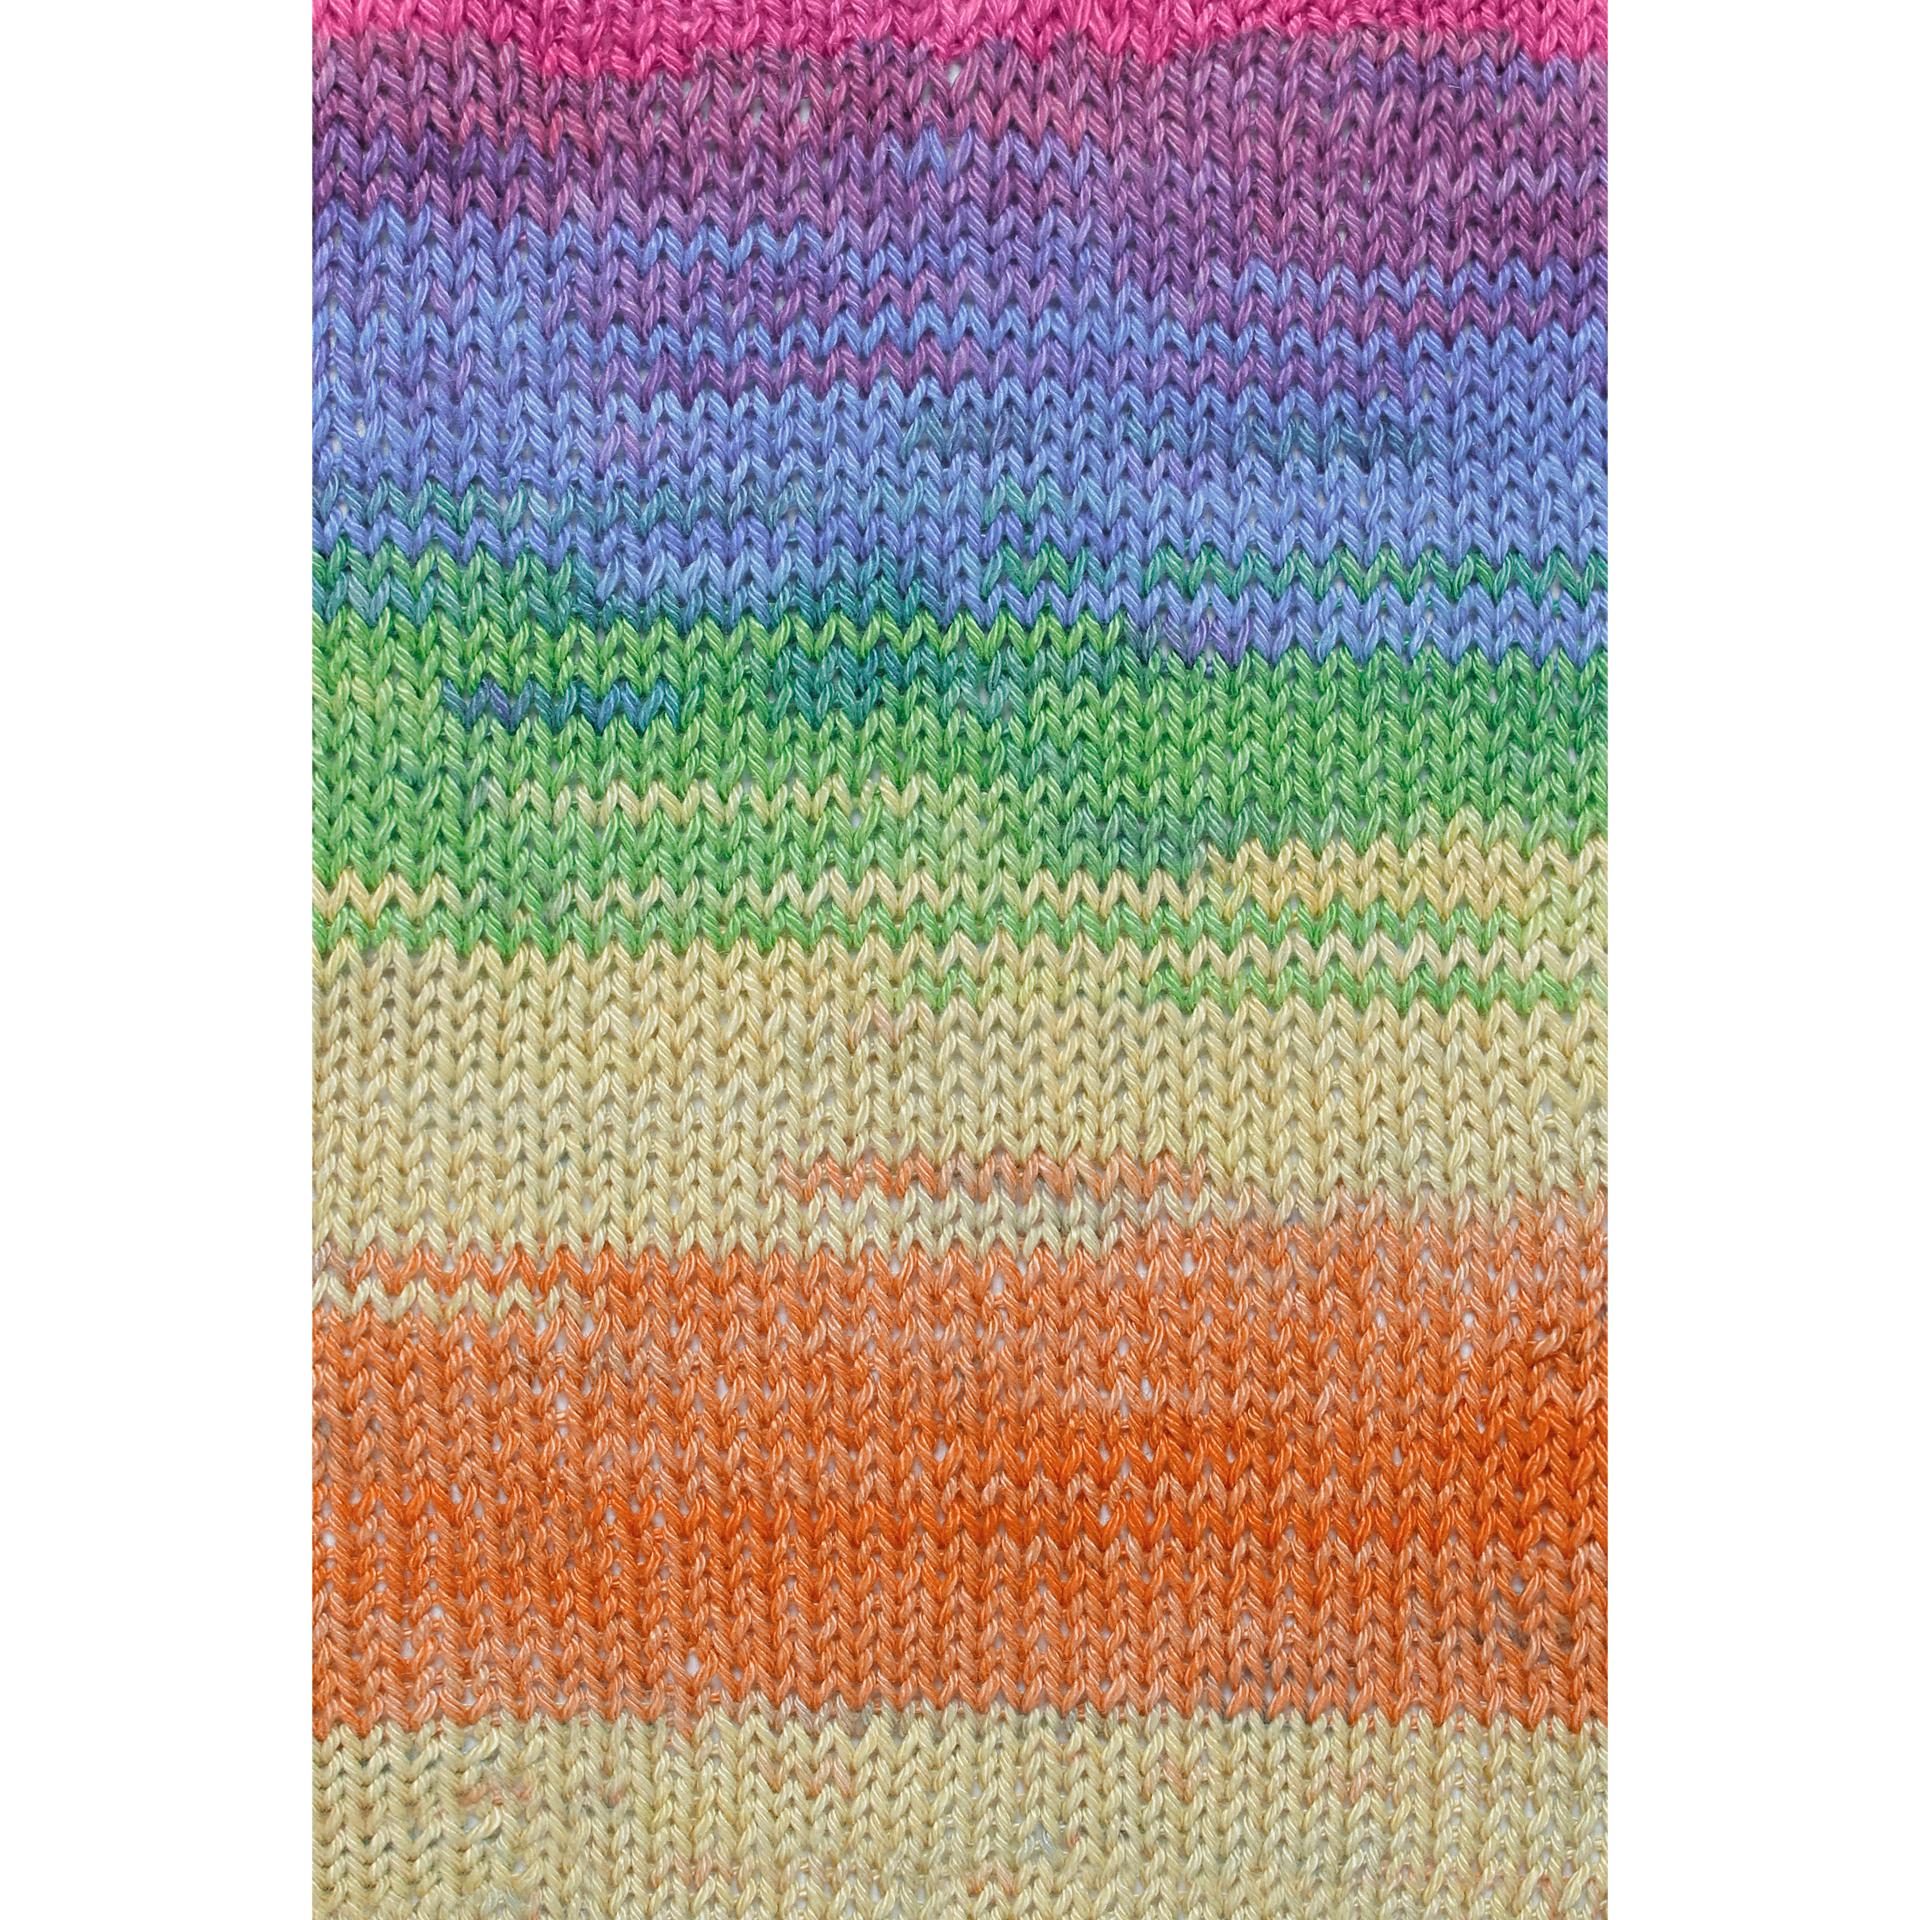 Cotton Quick Batik, 100g/Knäuel, 100 % Baumwolle 